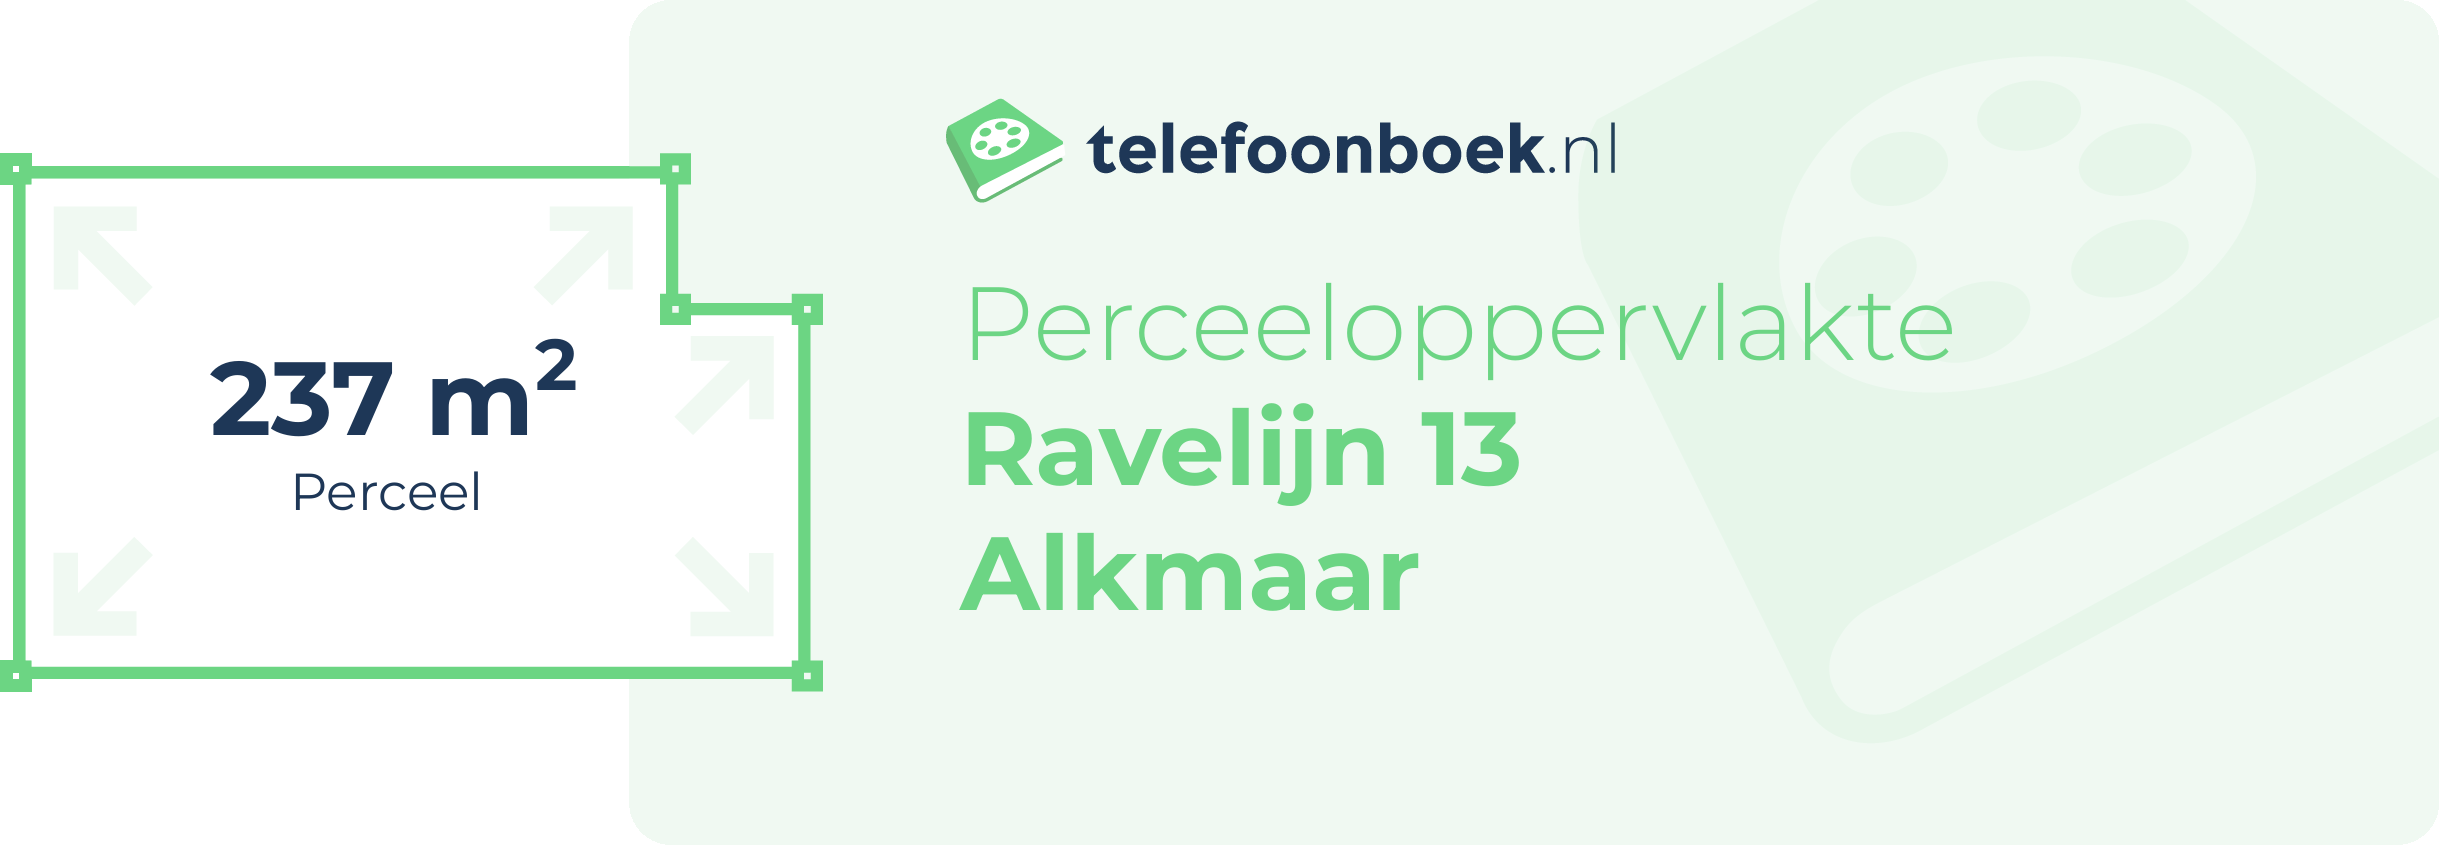 Perceeloppervlakte Ravelijn 13 Alkmaar